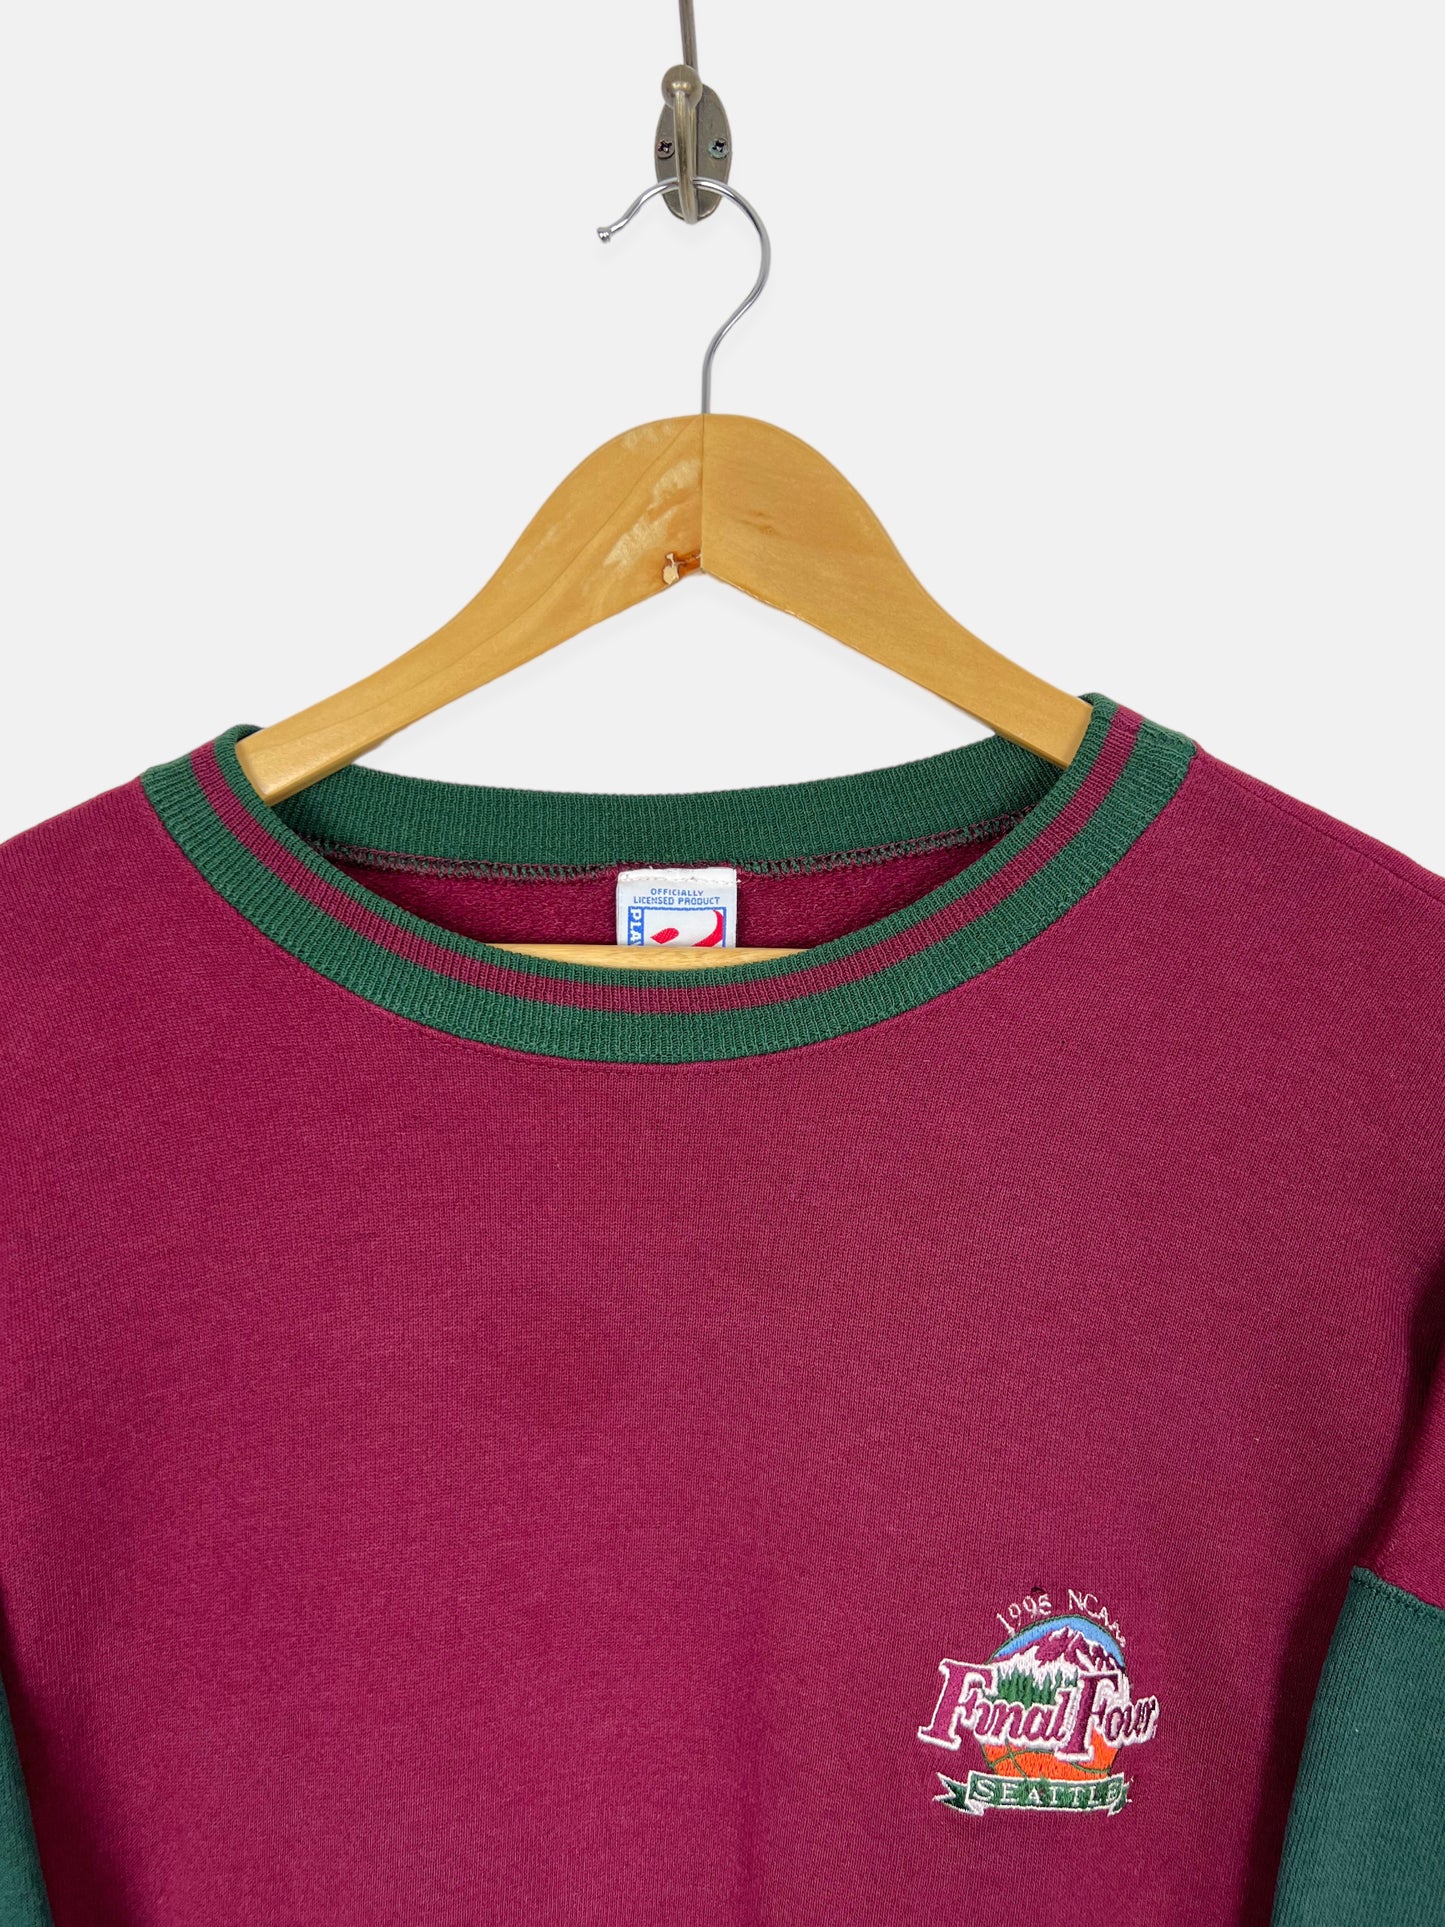 1995 NCAA Final Four USA Made Embroidered Vintage Sweatshirt Size XL